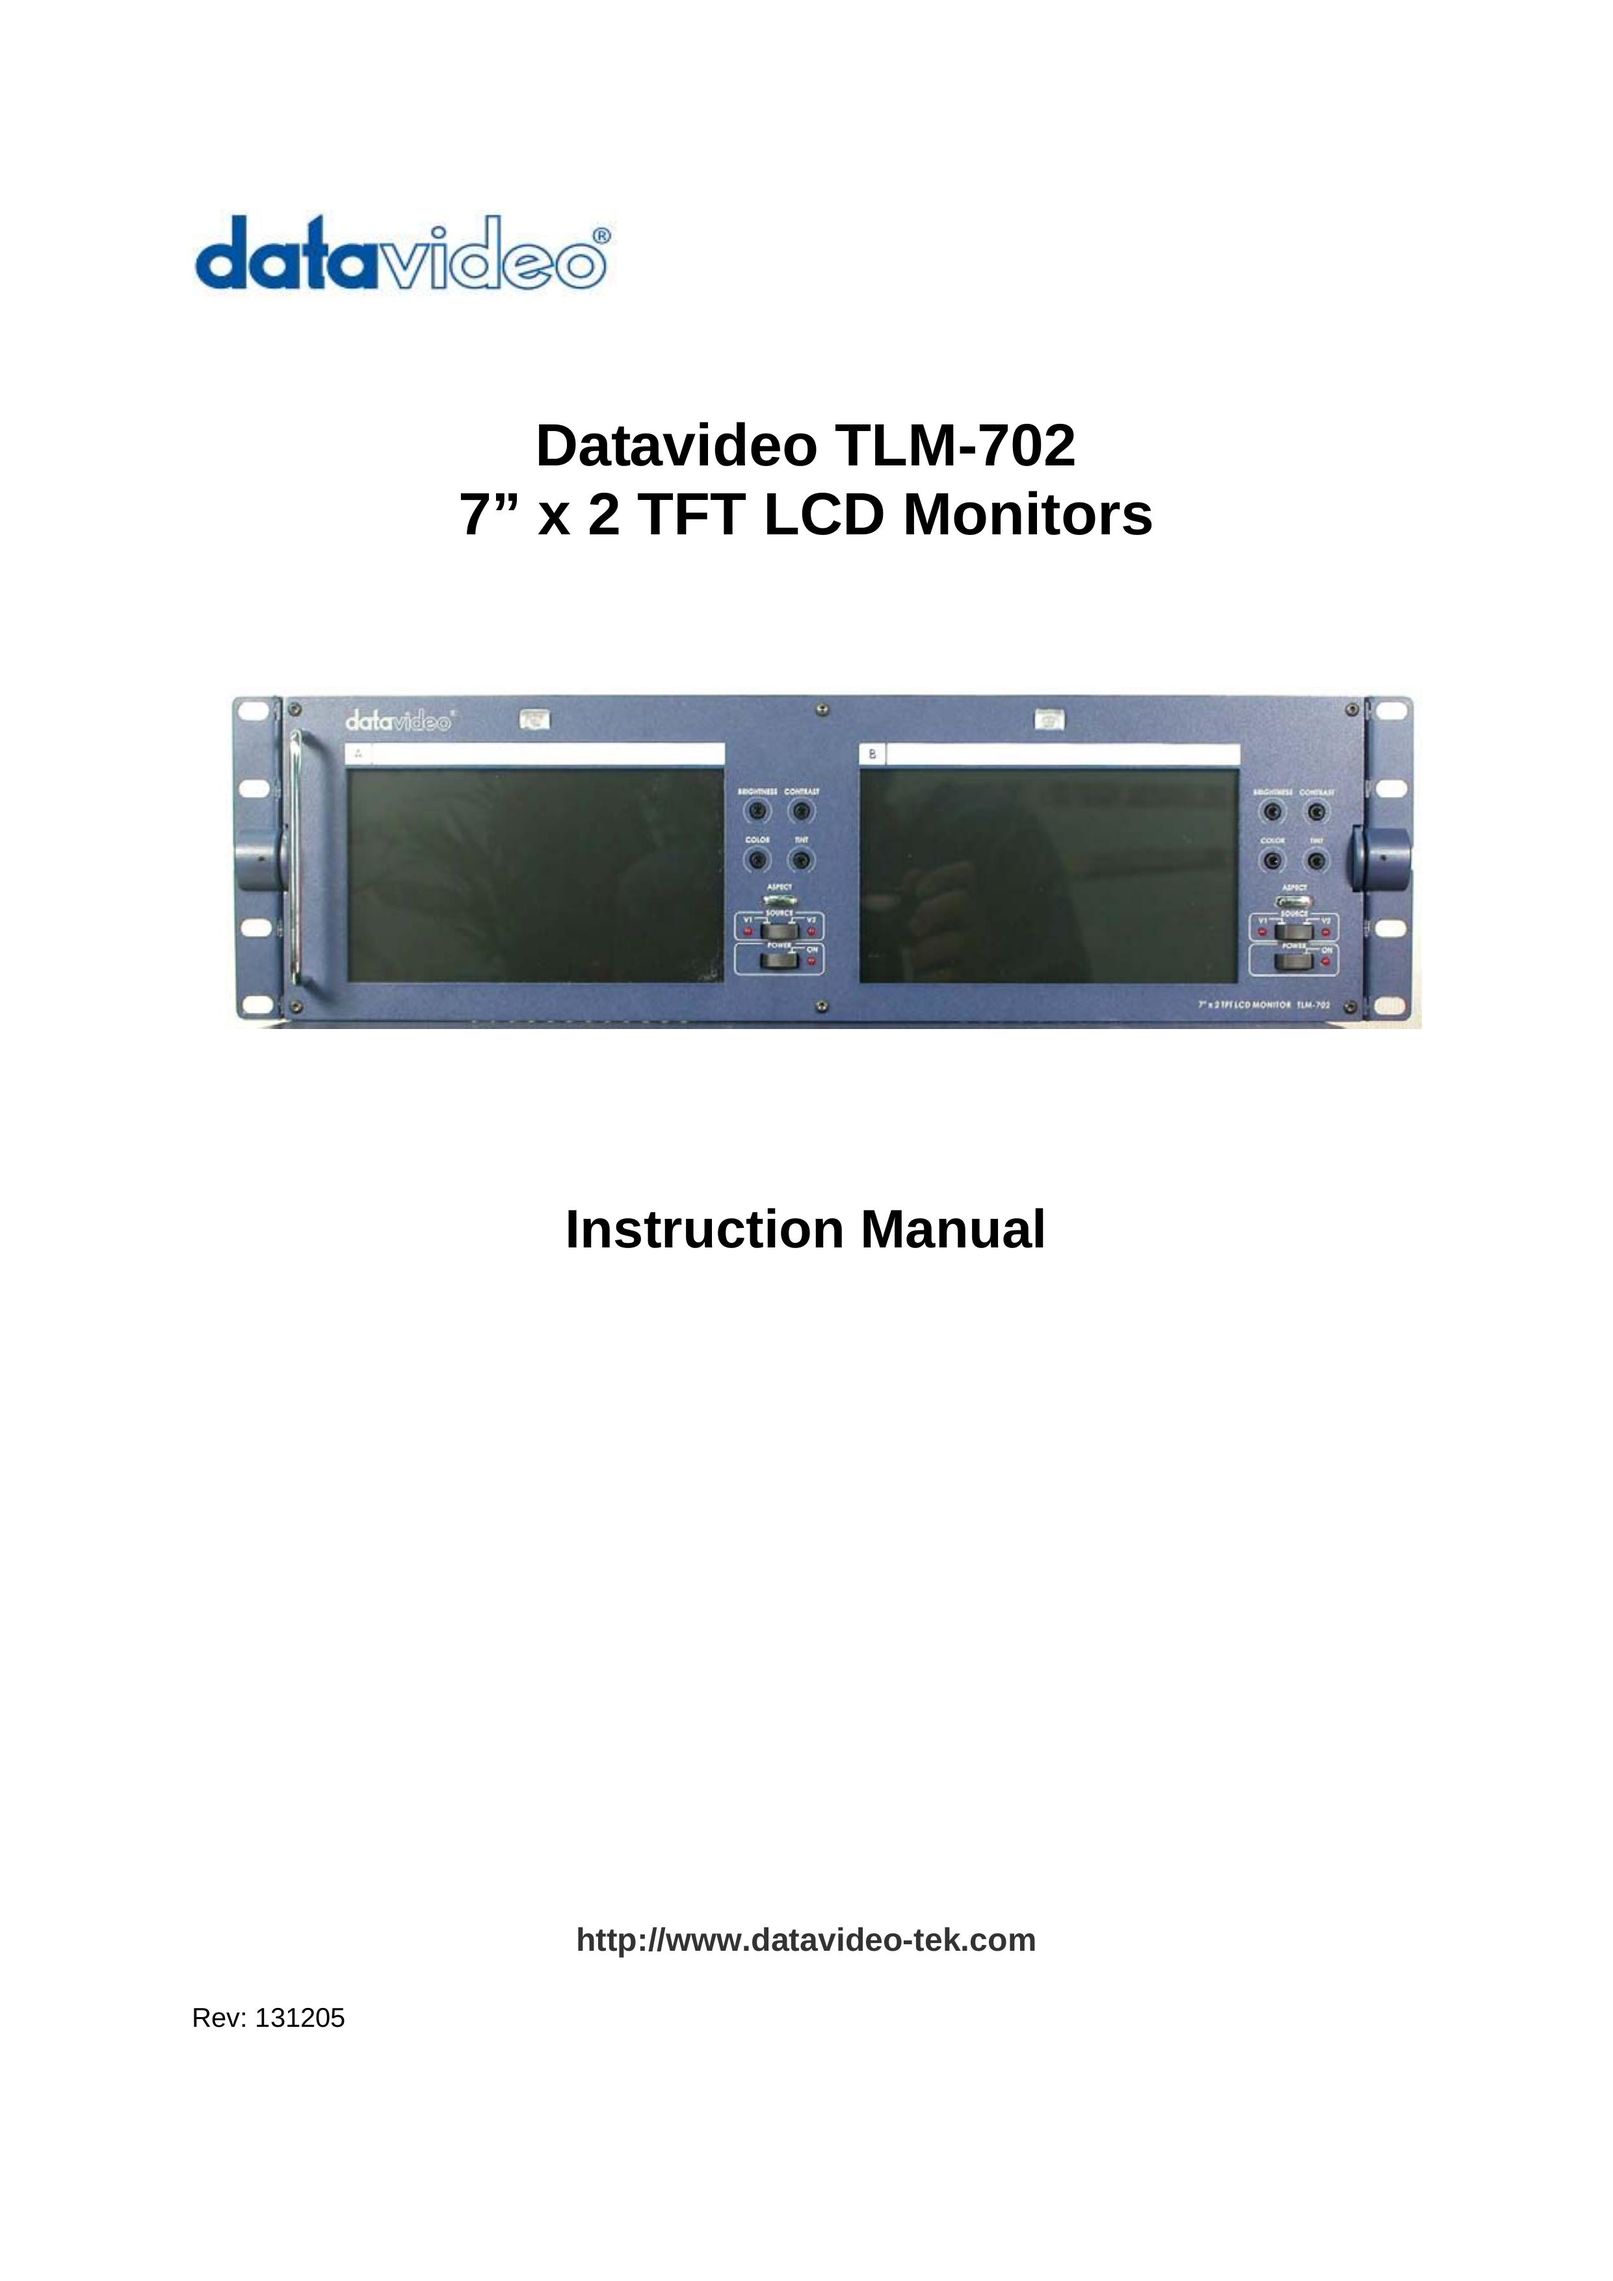 Datavideo TLM-702 Computer Monitor User Manual